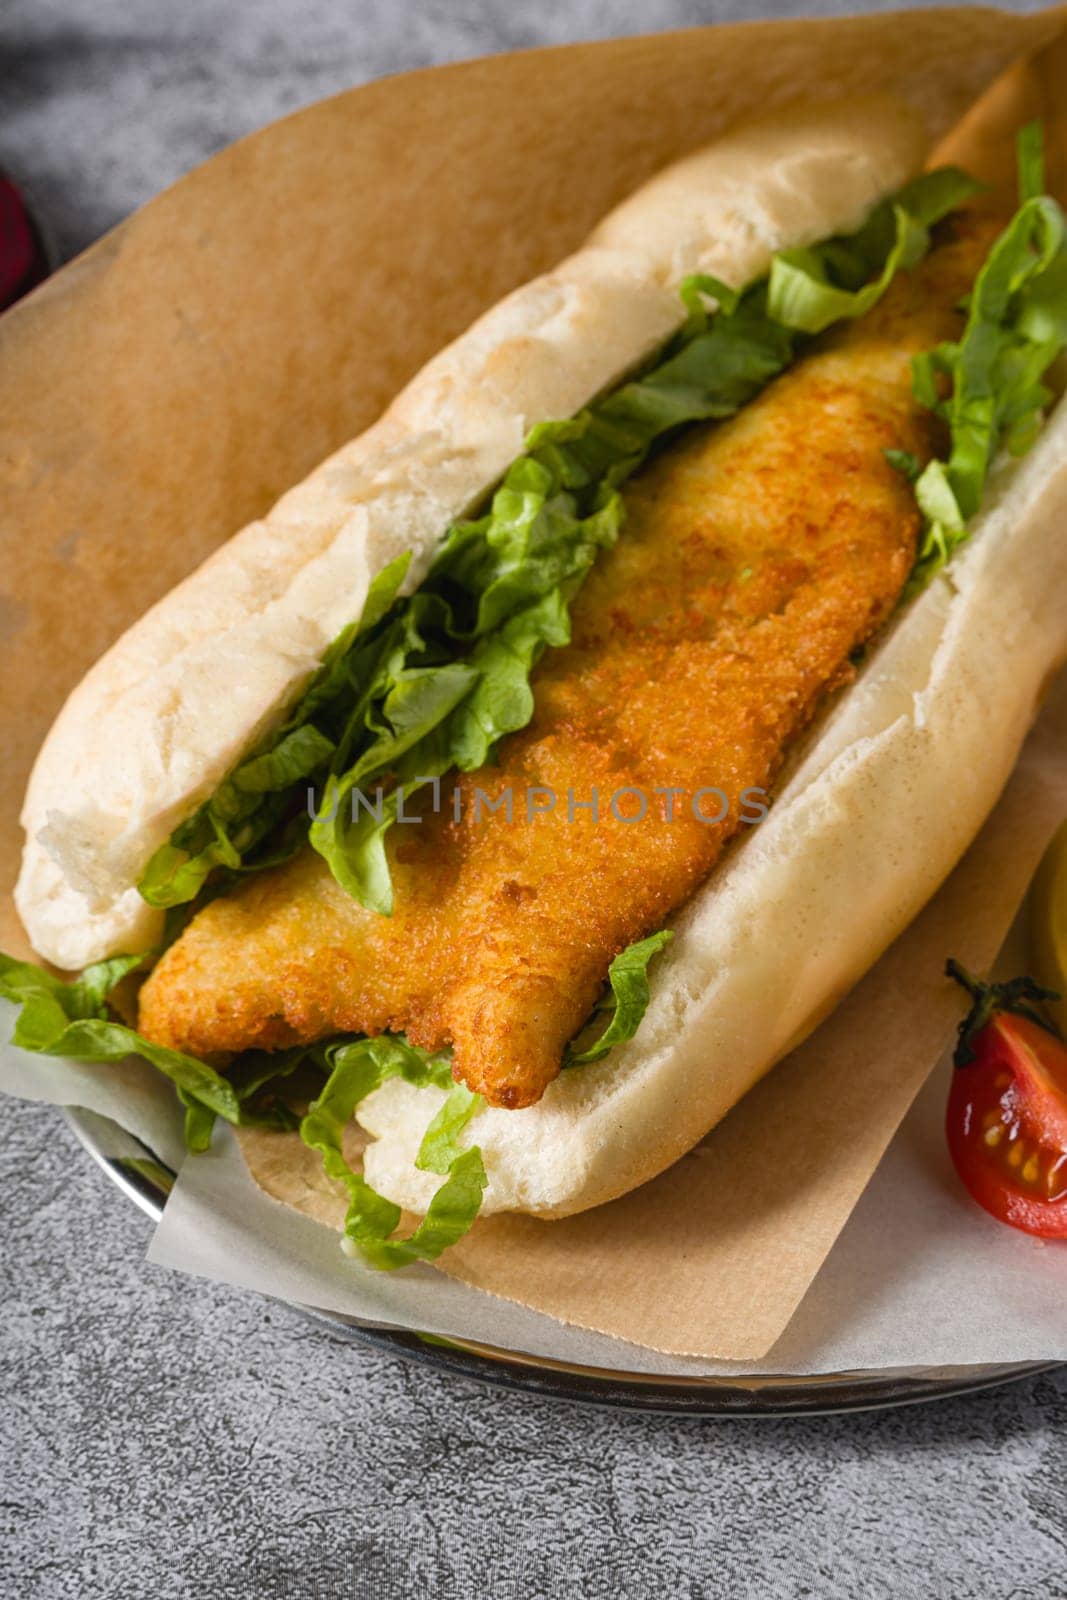 Fried fish sandwich with greens on the stone table. Turkish name Balik Ekmek